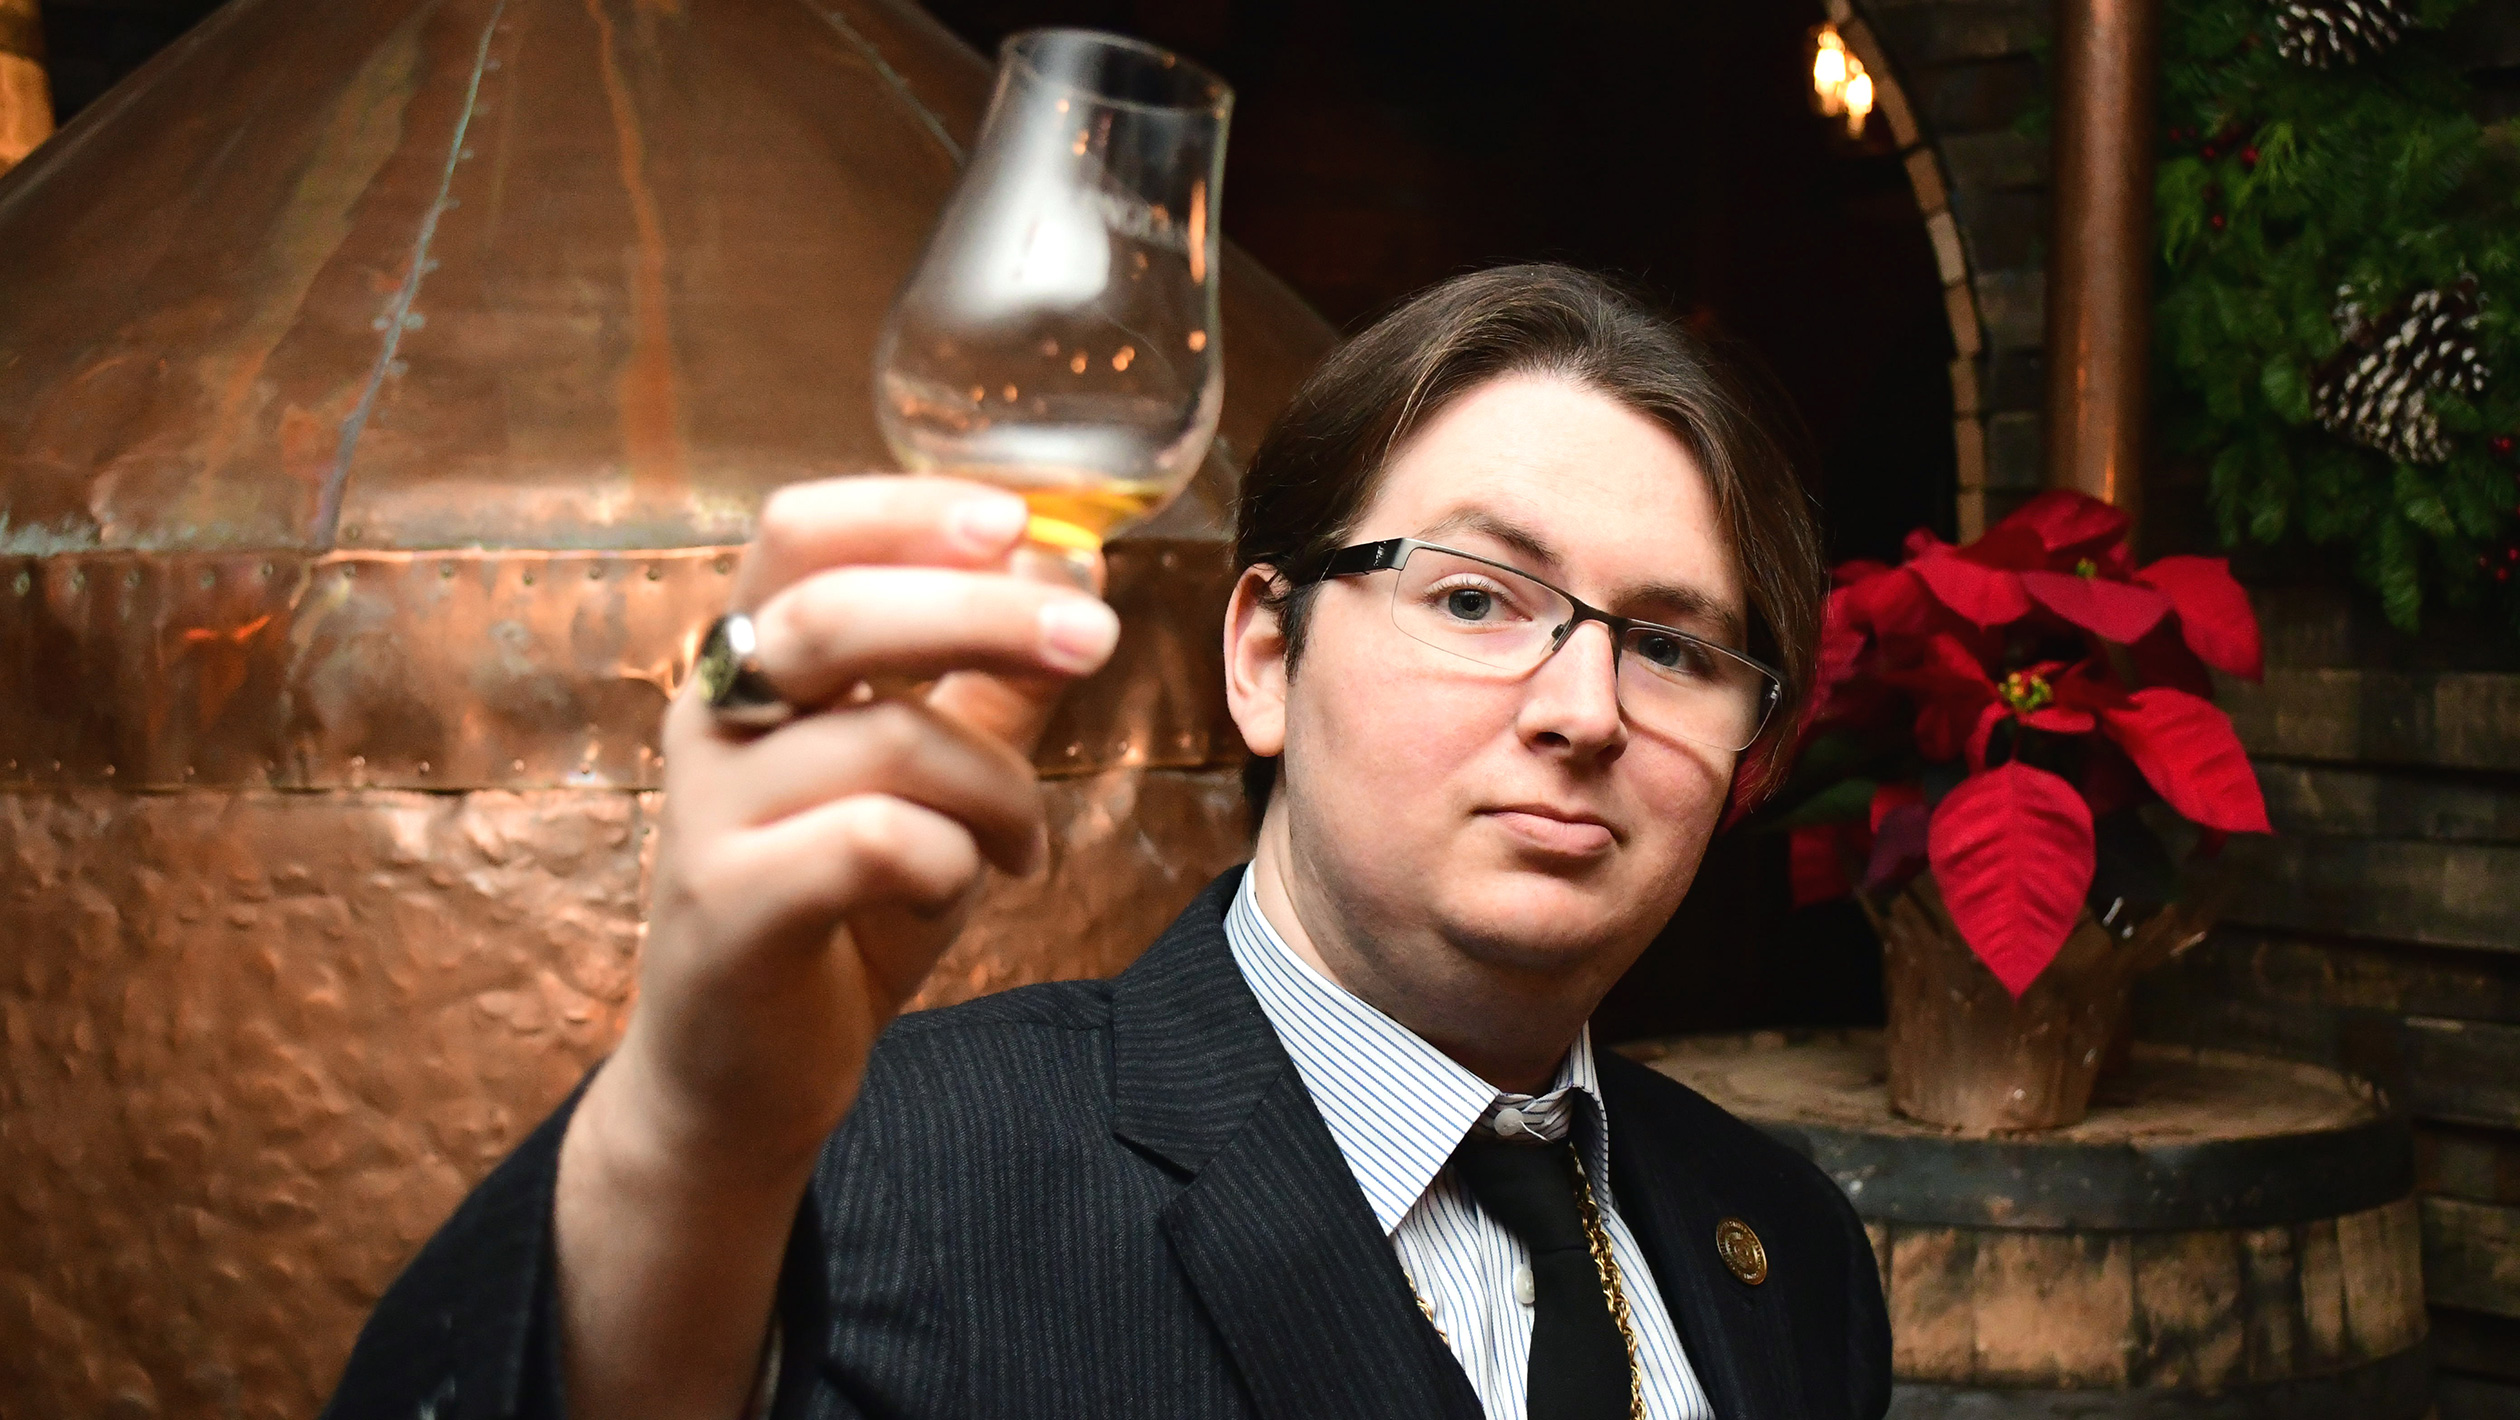 Sam Knash Green examines a sample of whiskey